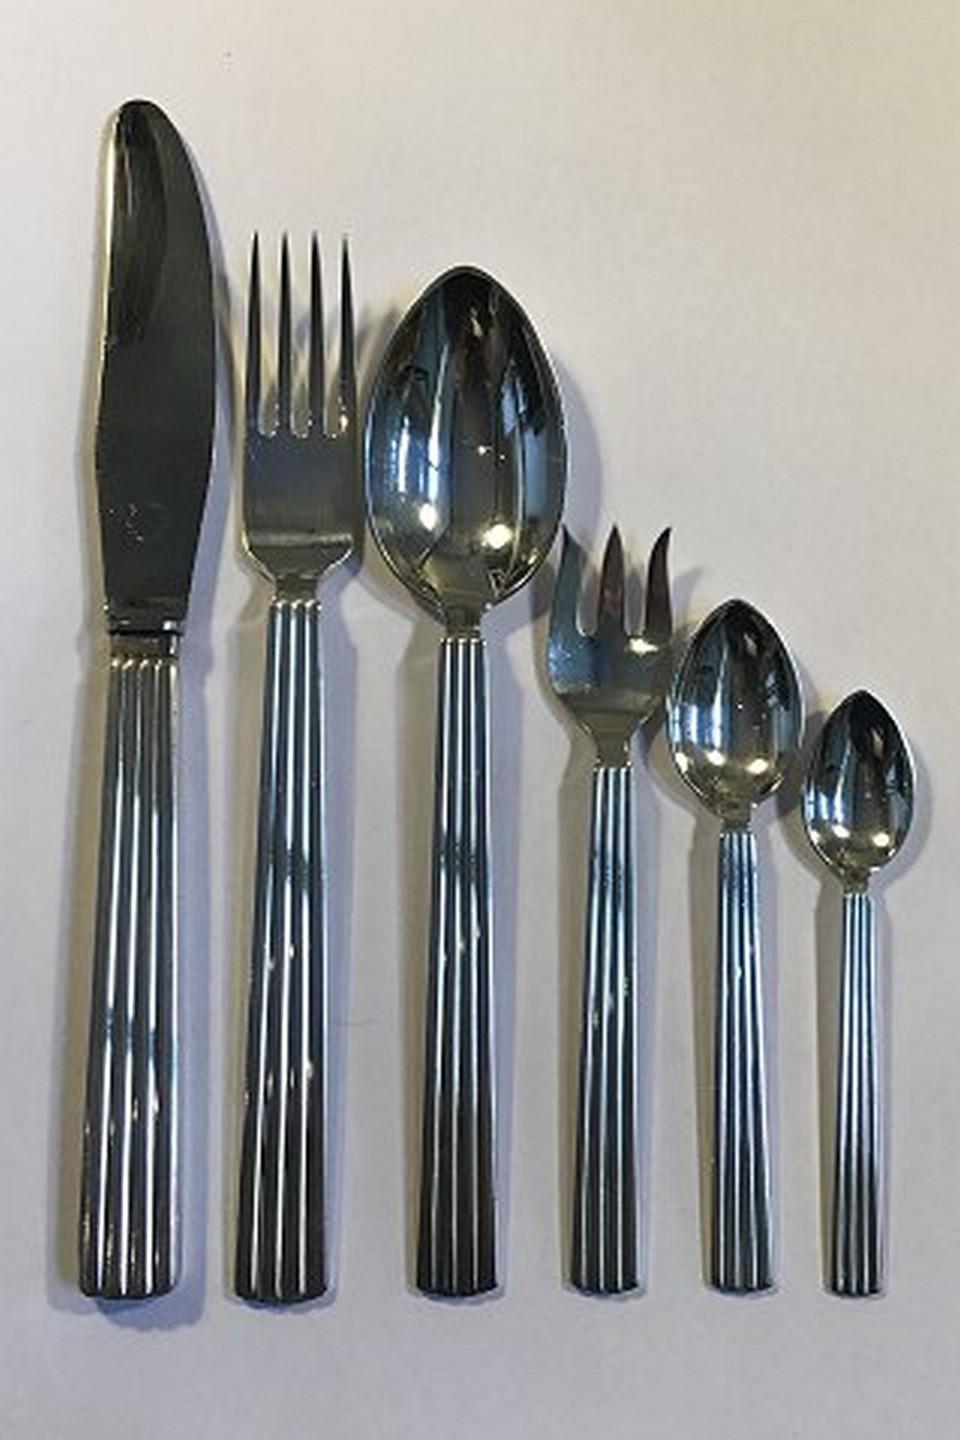 Georg Jensen sterling silver bernadotte flatware set 12 people (72 pcs)

The set consists of the following pieces:

12 x dinner knives 22 cm L (8 21/32